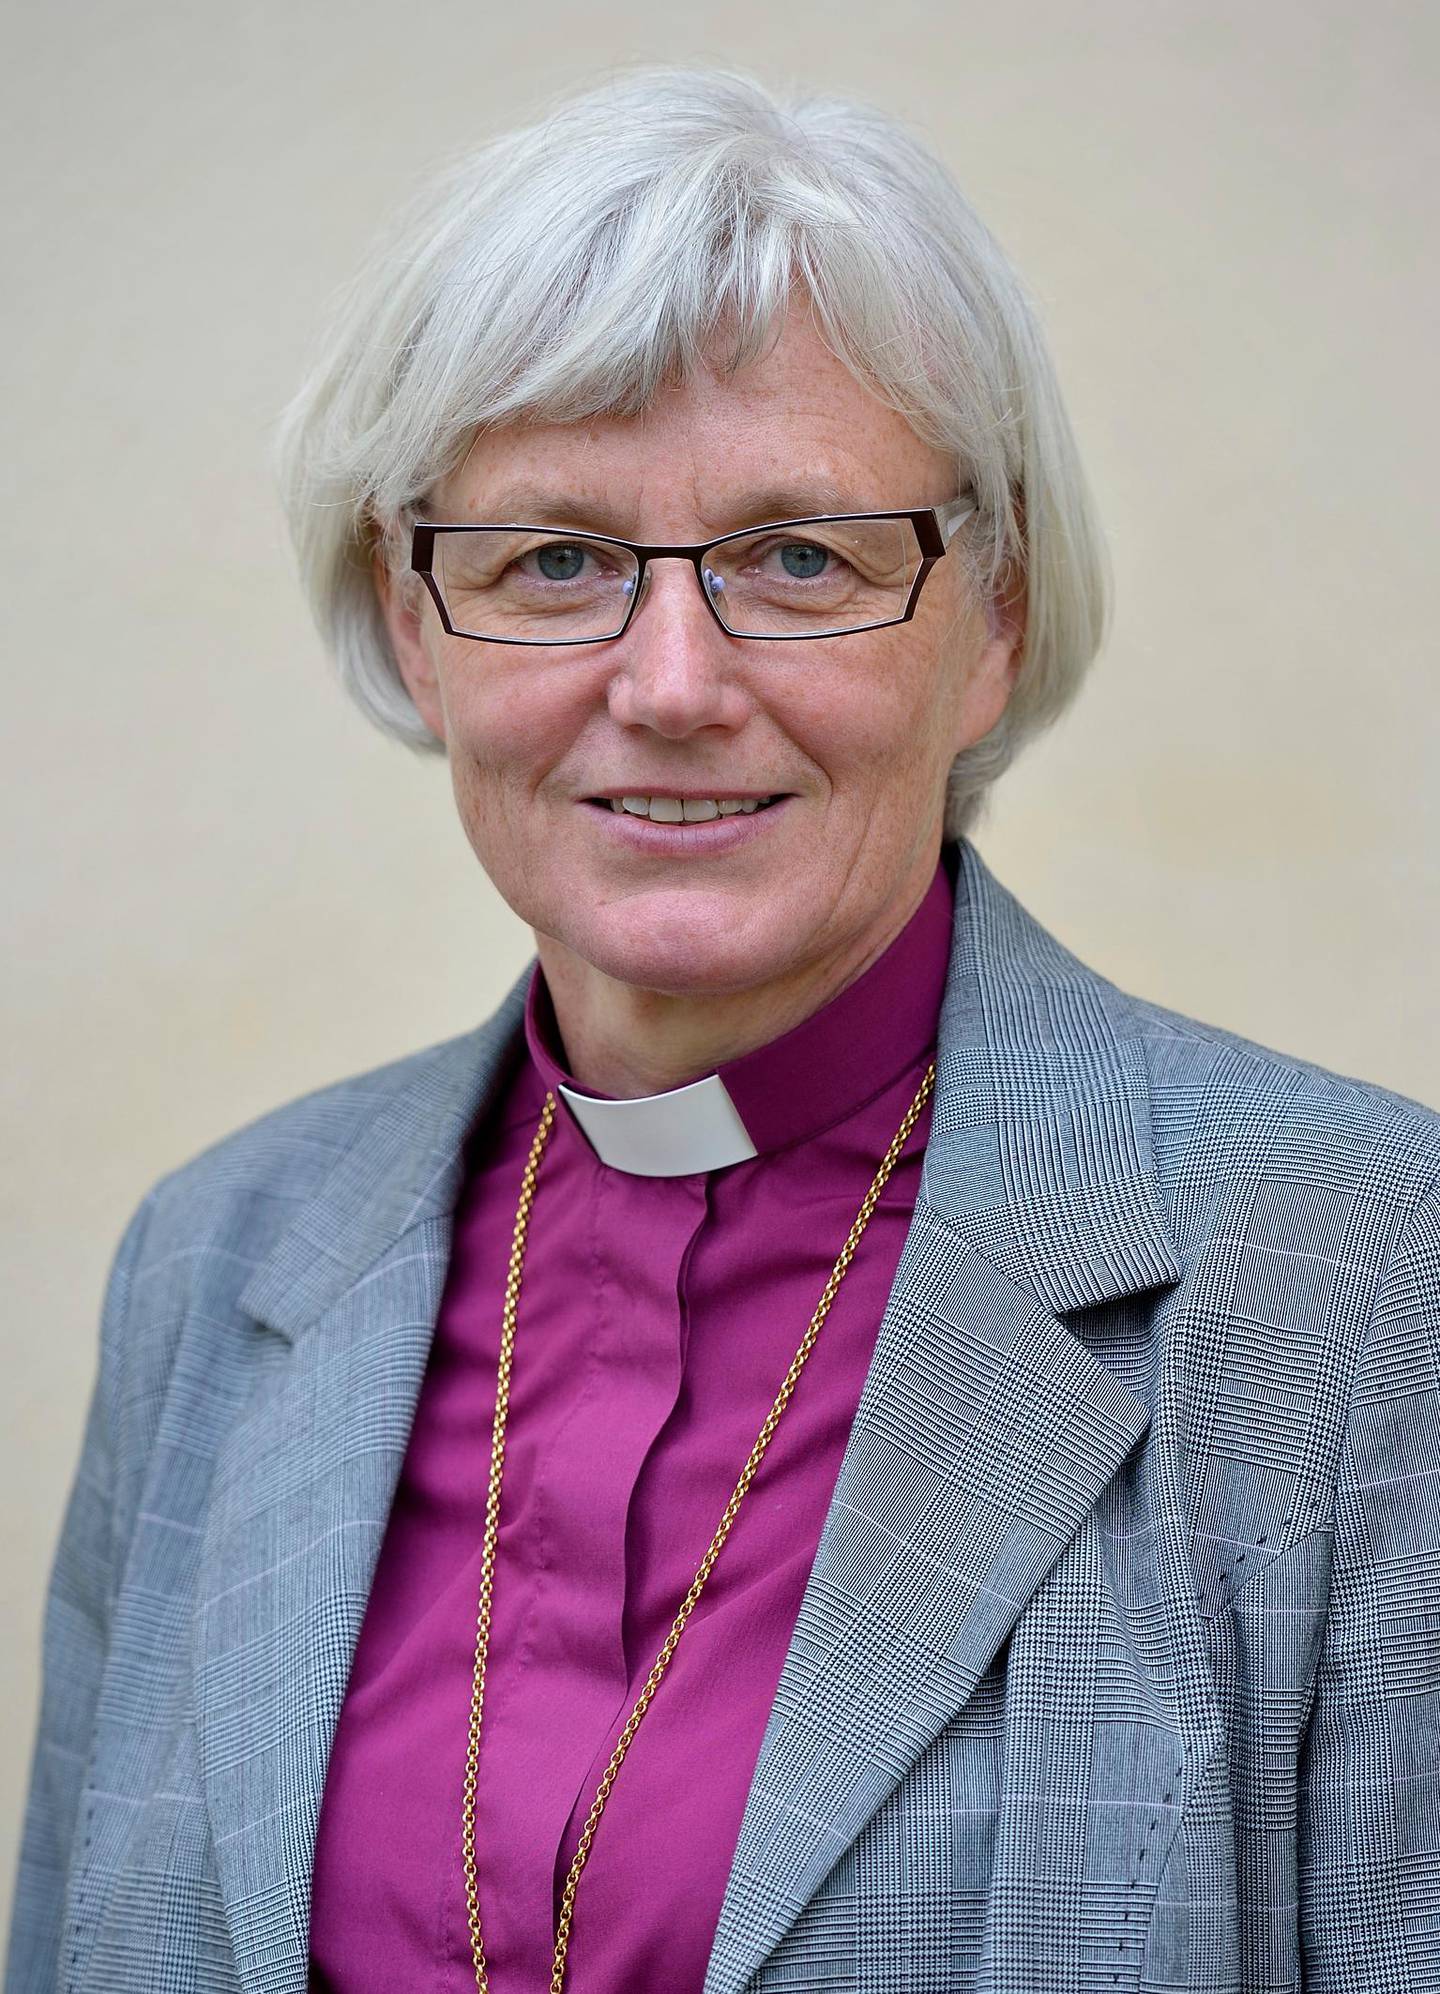 Biskop Antje Jackelén, Lunds stift (2013). *** Local Caption *** Biskop Antje Jackelén, Lunds stift (2013)